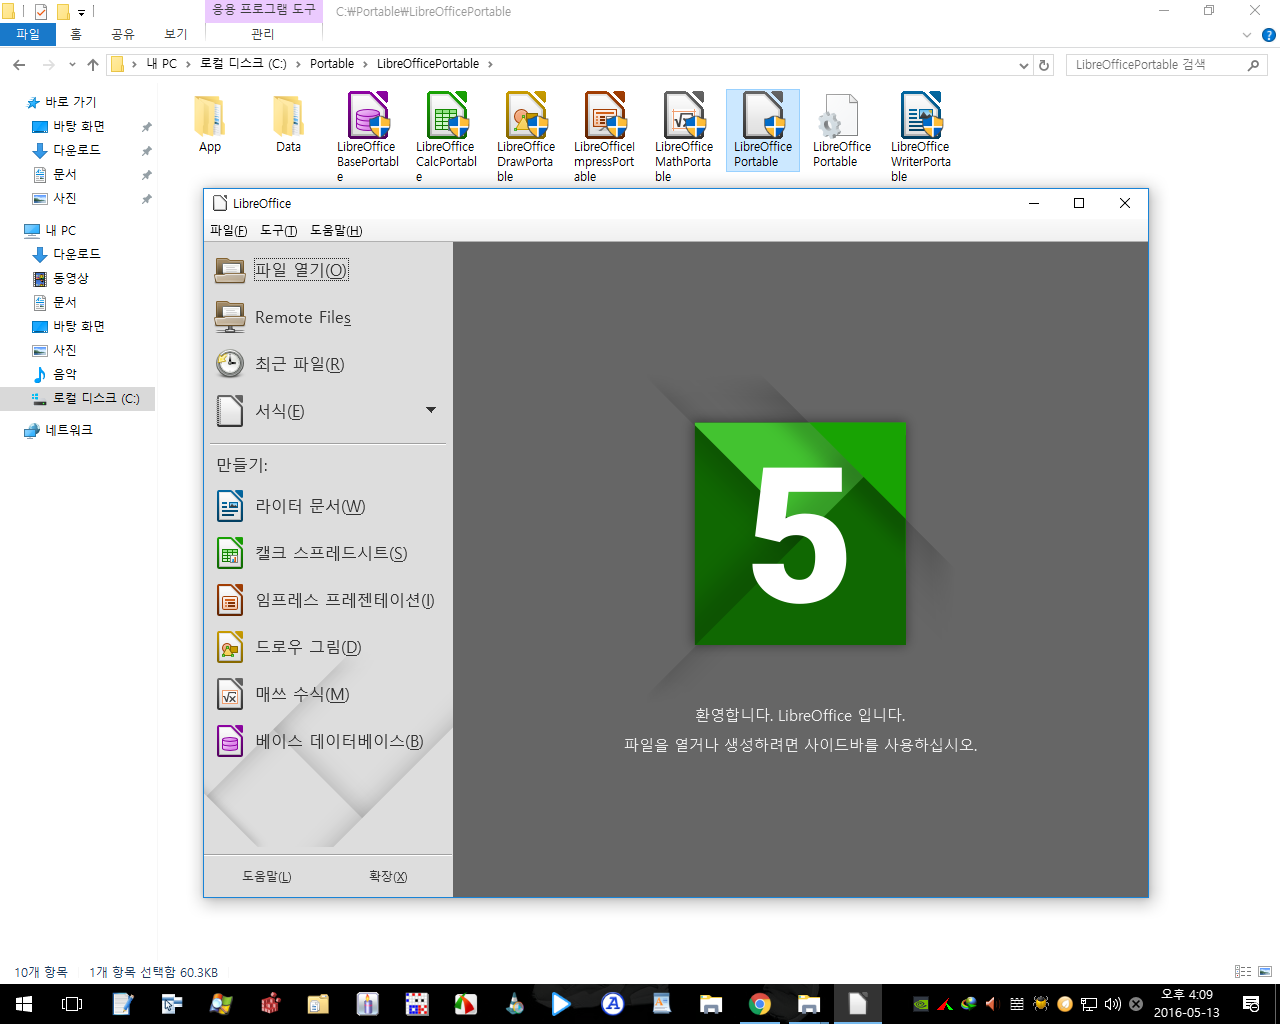 LibreOfficePortable.png